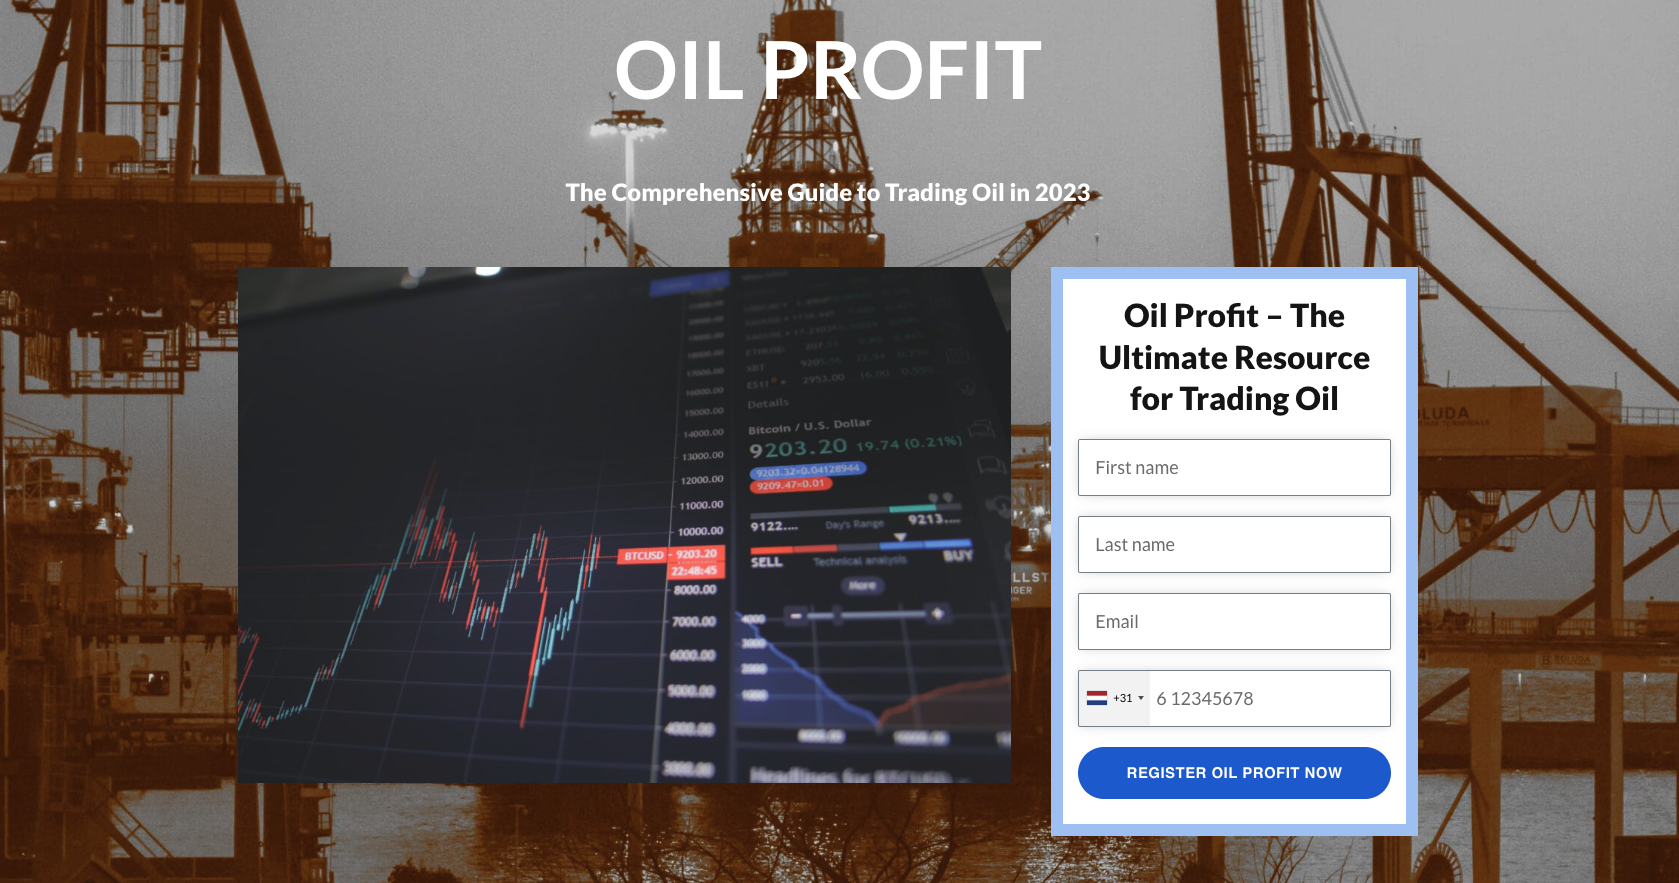 Oil Profit Featured Image